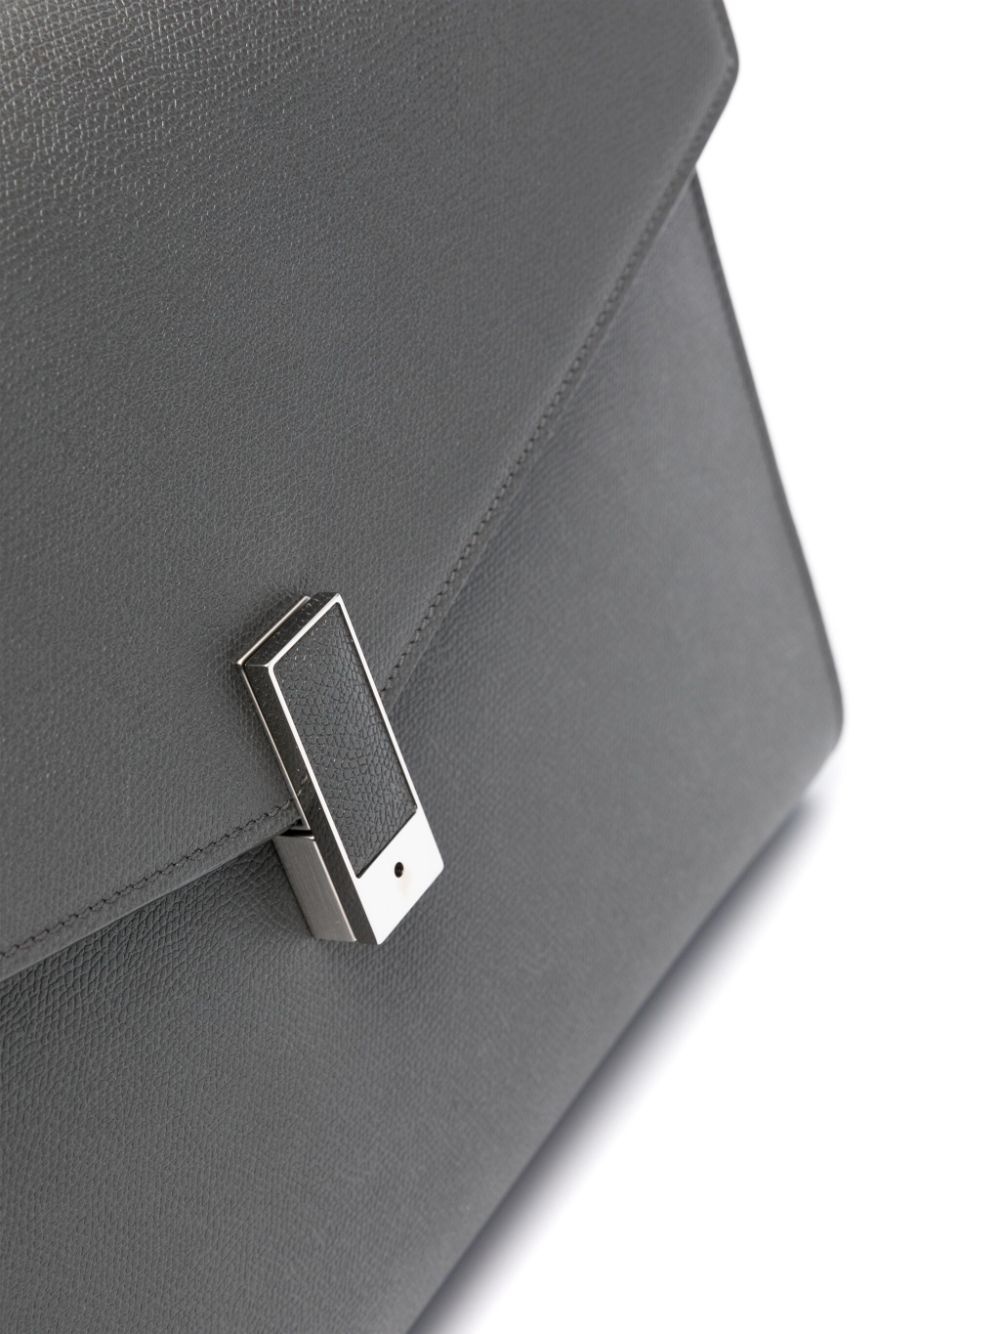 Iside leather handbag - 4